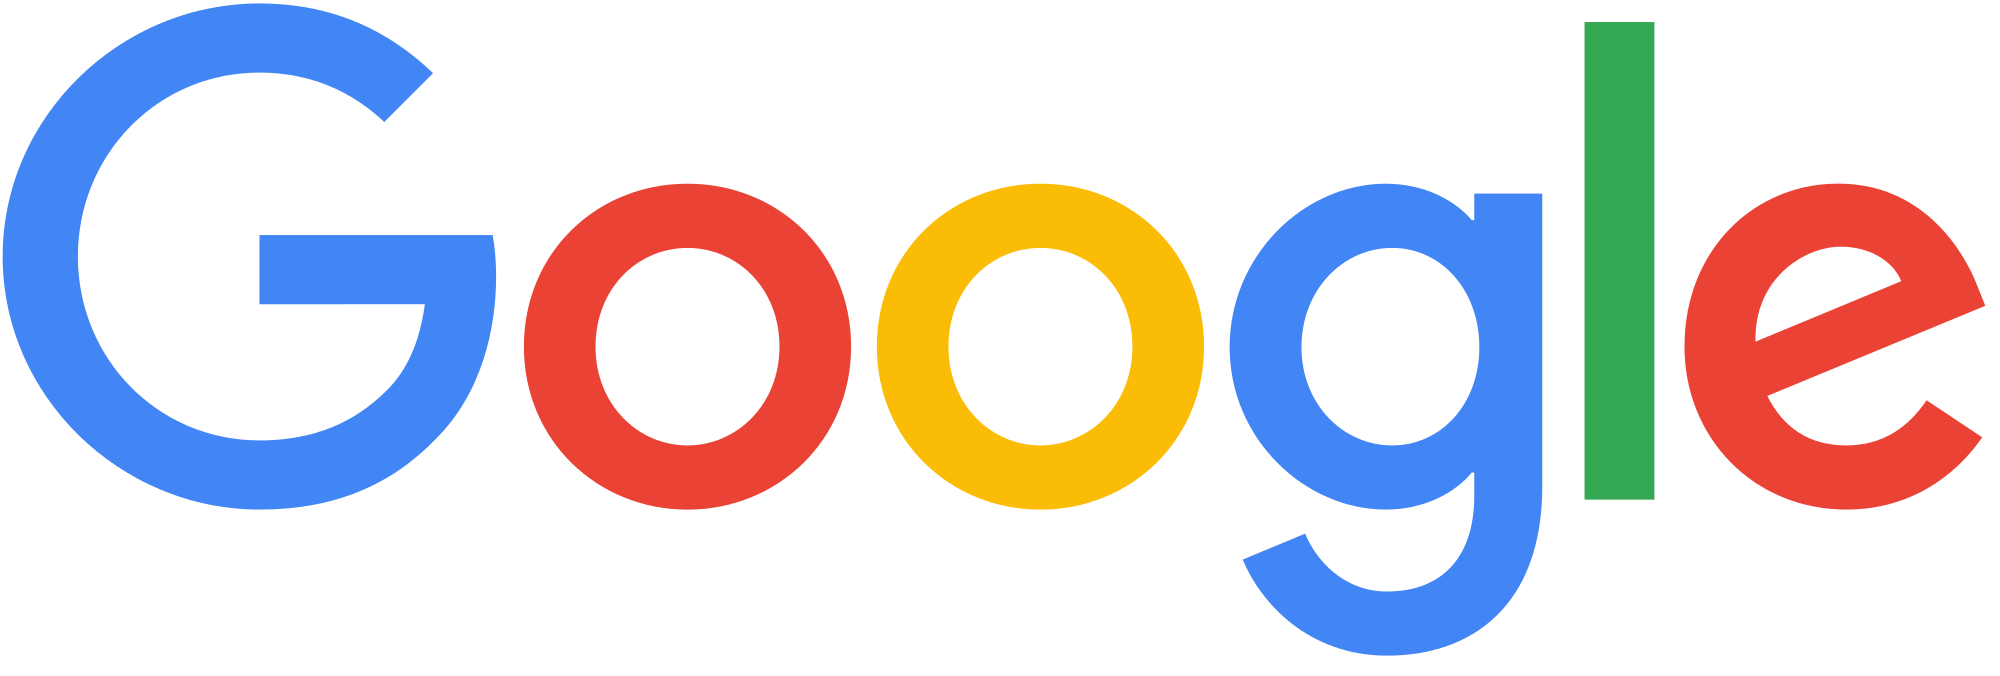 Googles-Chef erhält satte Erfolgsbeteiligung